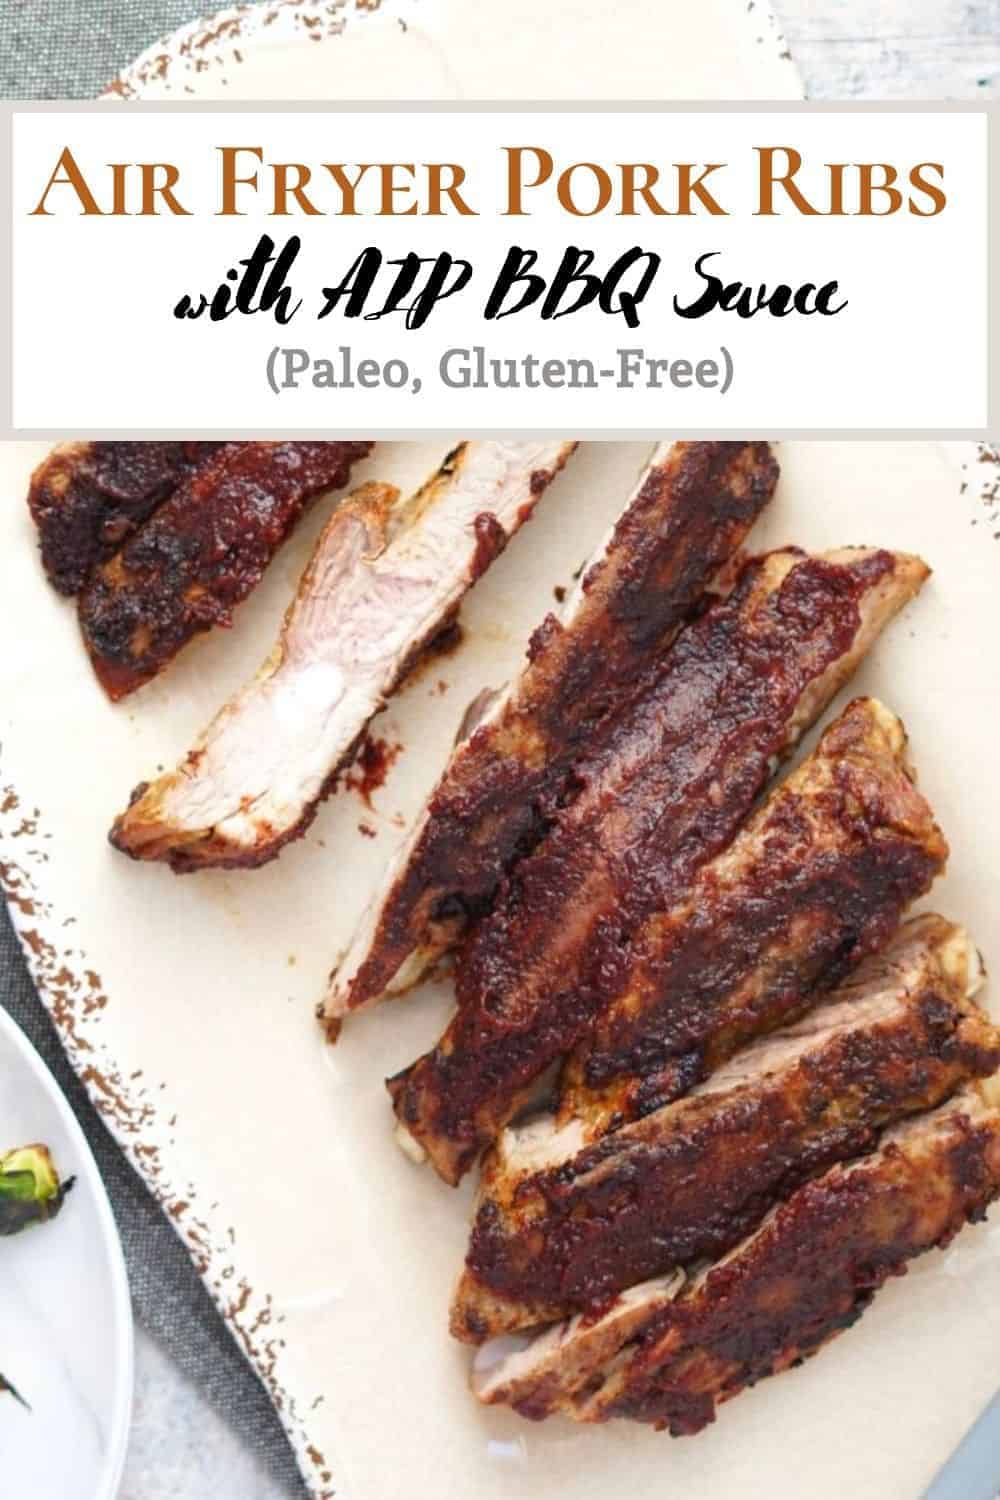 Air Fryer Pork Ribs with AIP BBQ Sauce (Paleo, Gluten-Free)